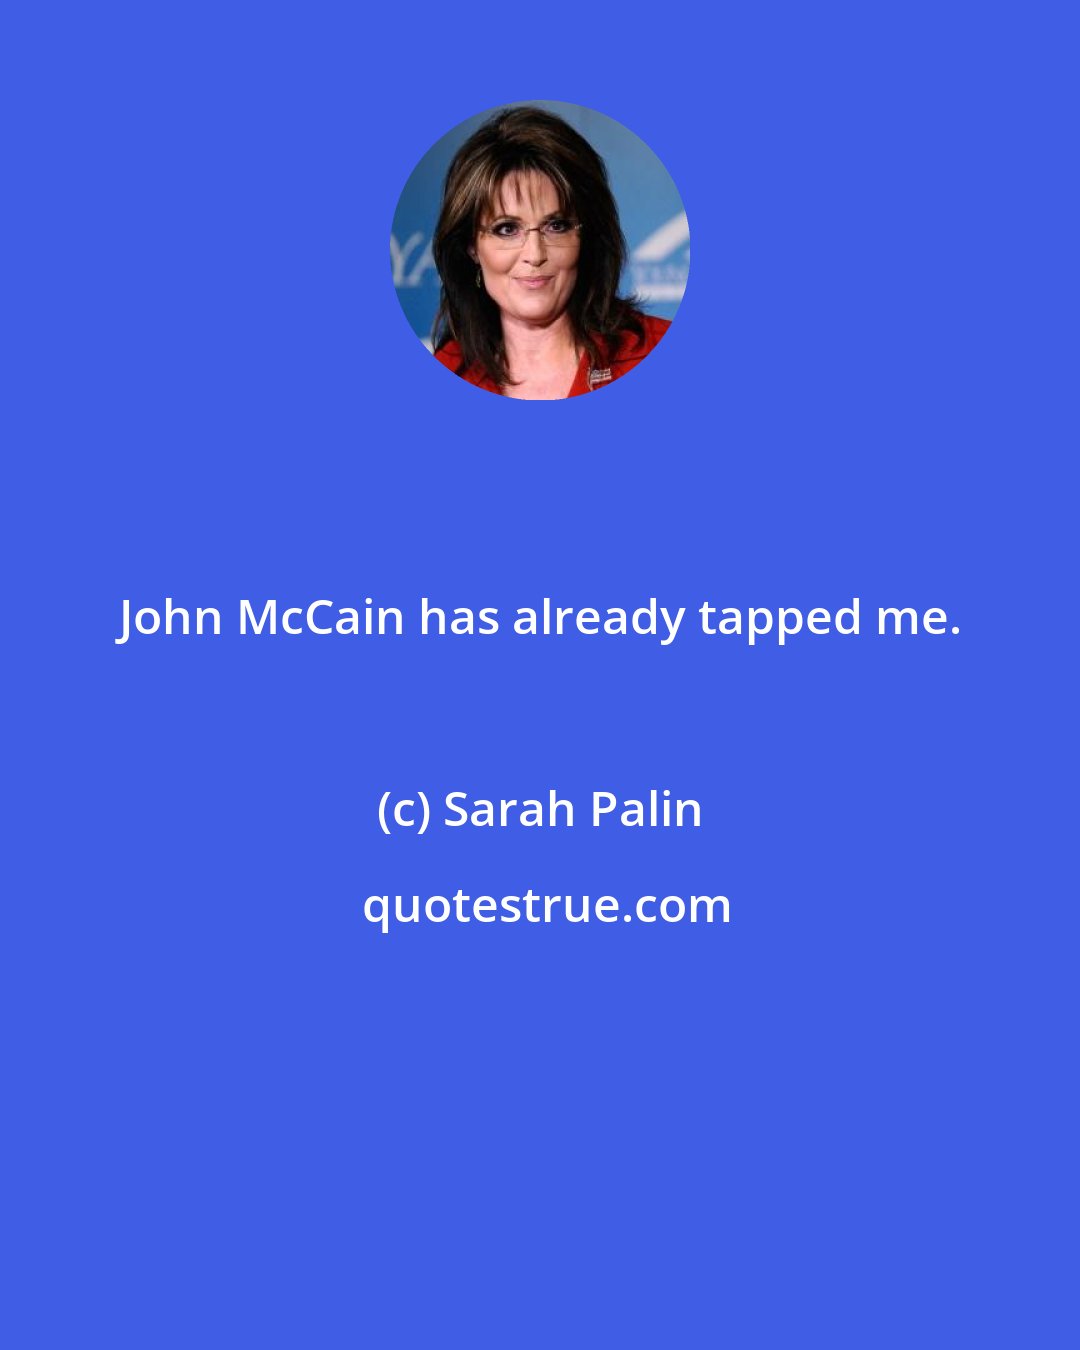 Sarah Palin: John McCain has already tapped me.